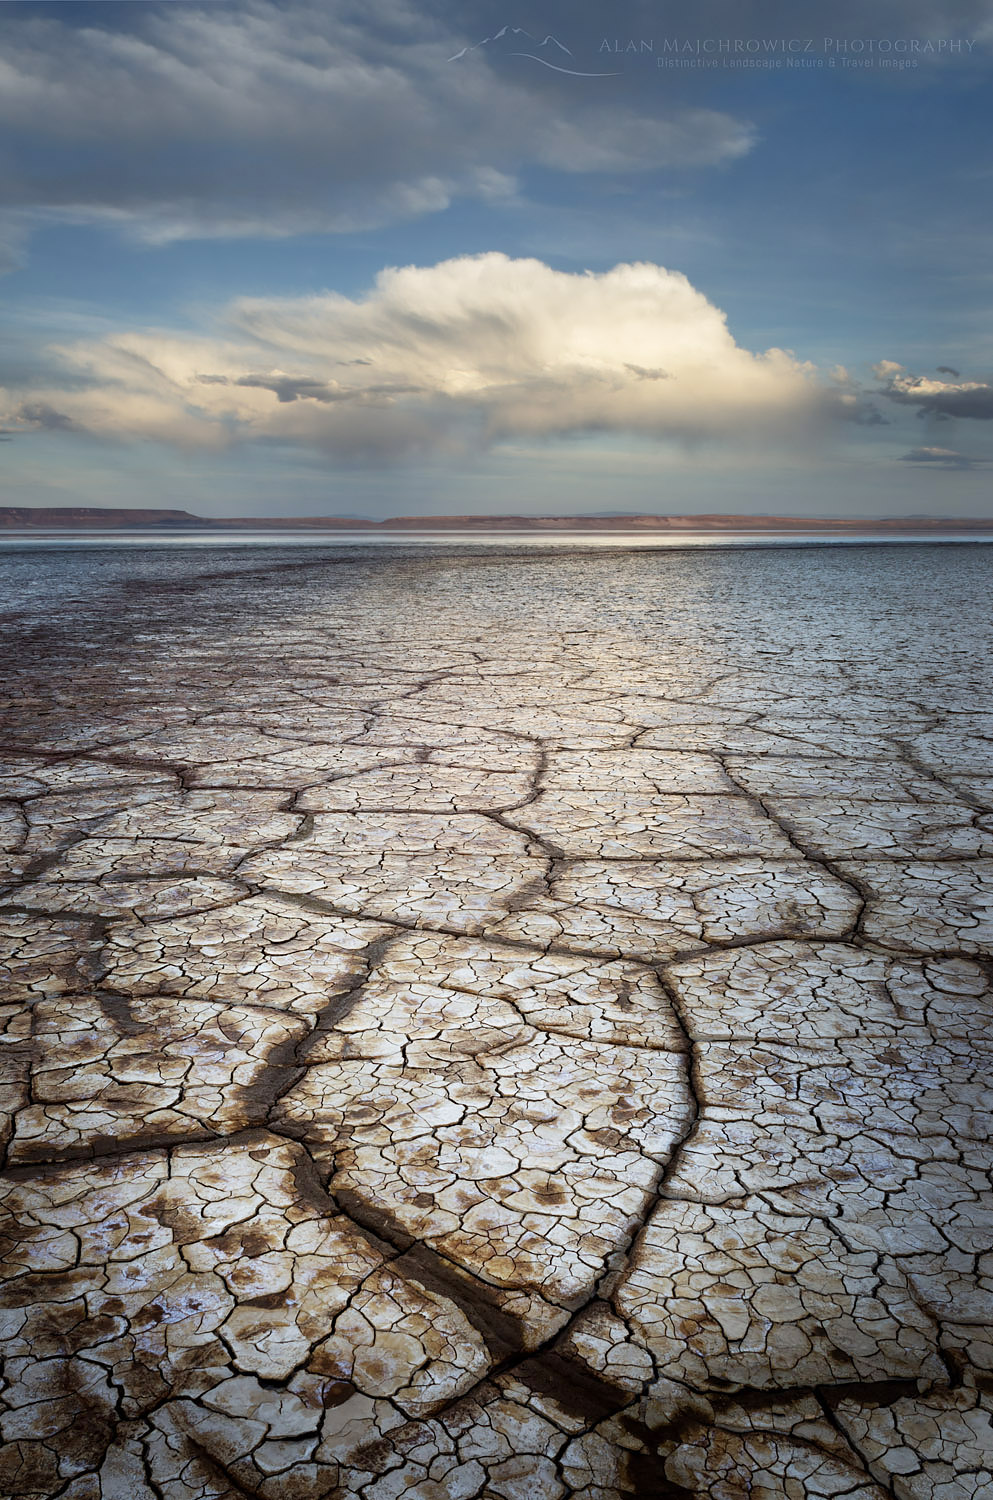 Geometric patterns in drying mud, Alvord Lake, a seasonal shallow alkali lake in Harney County, Oregon #61003